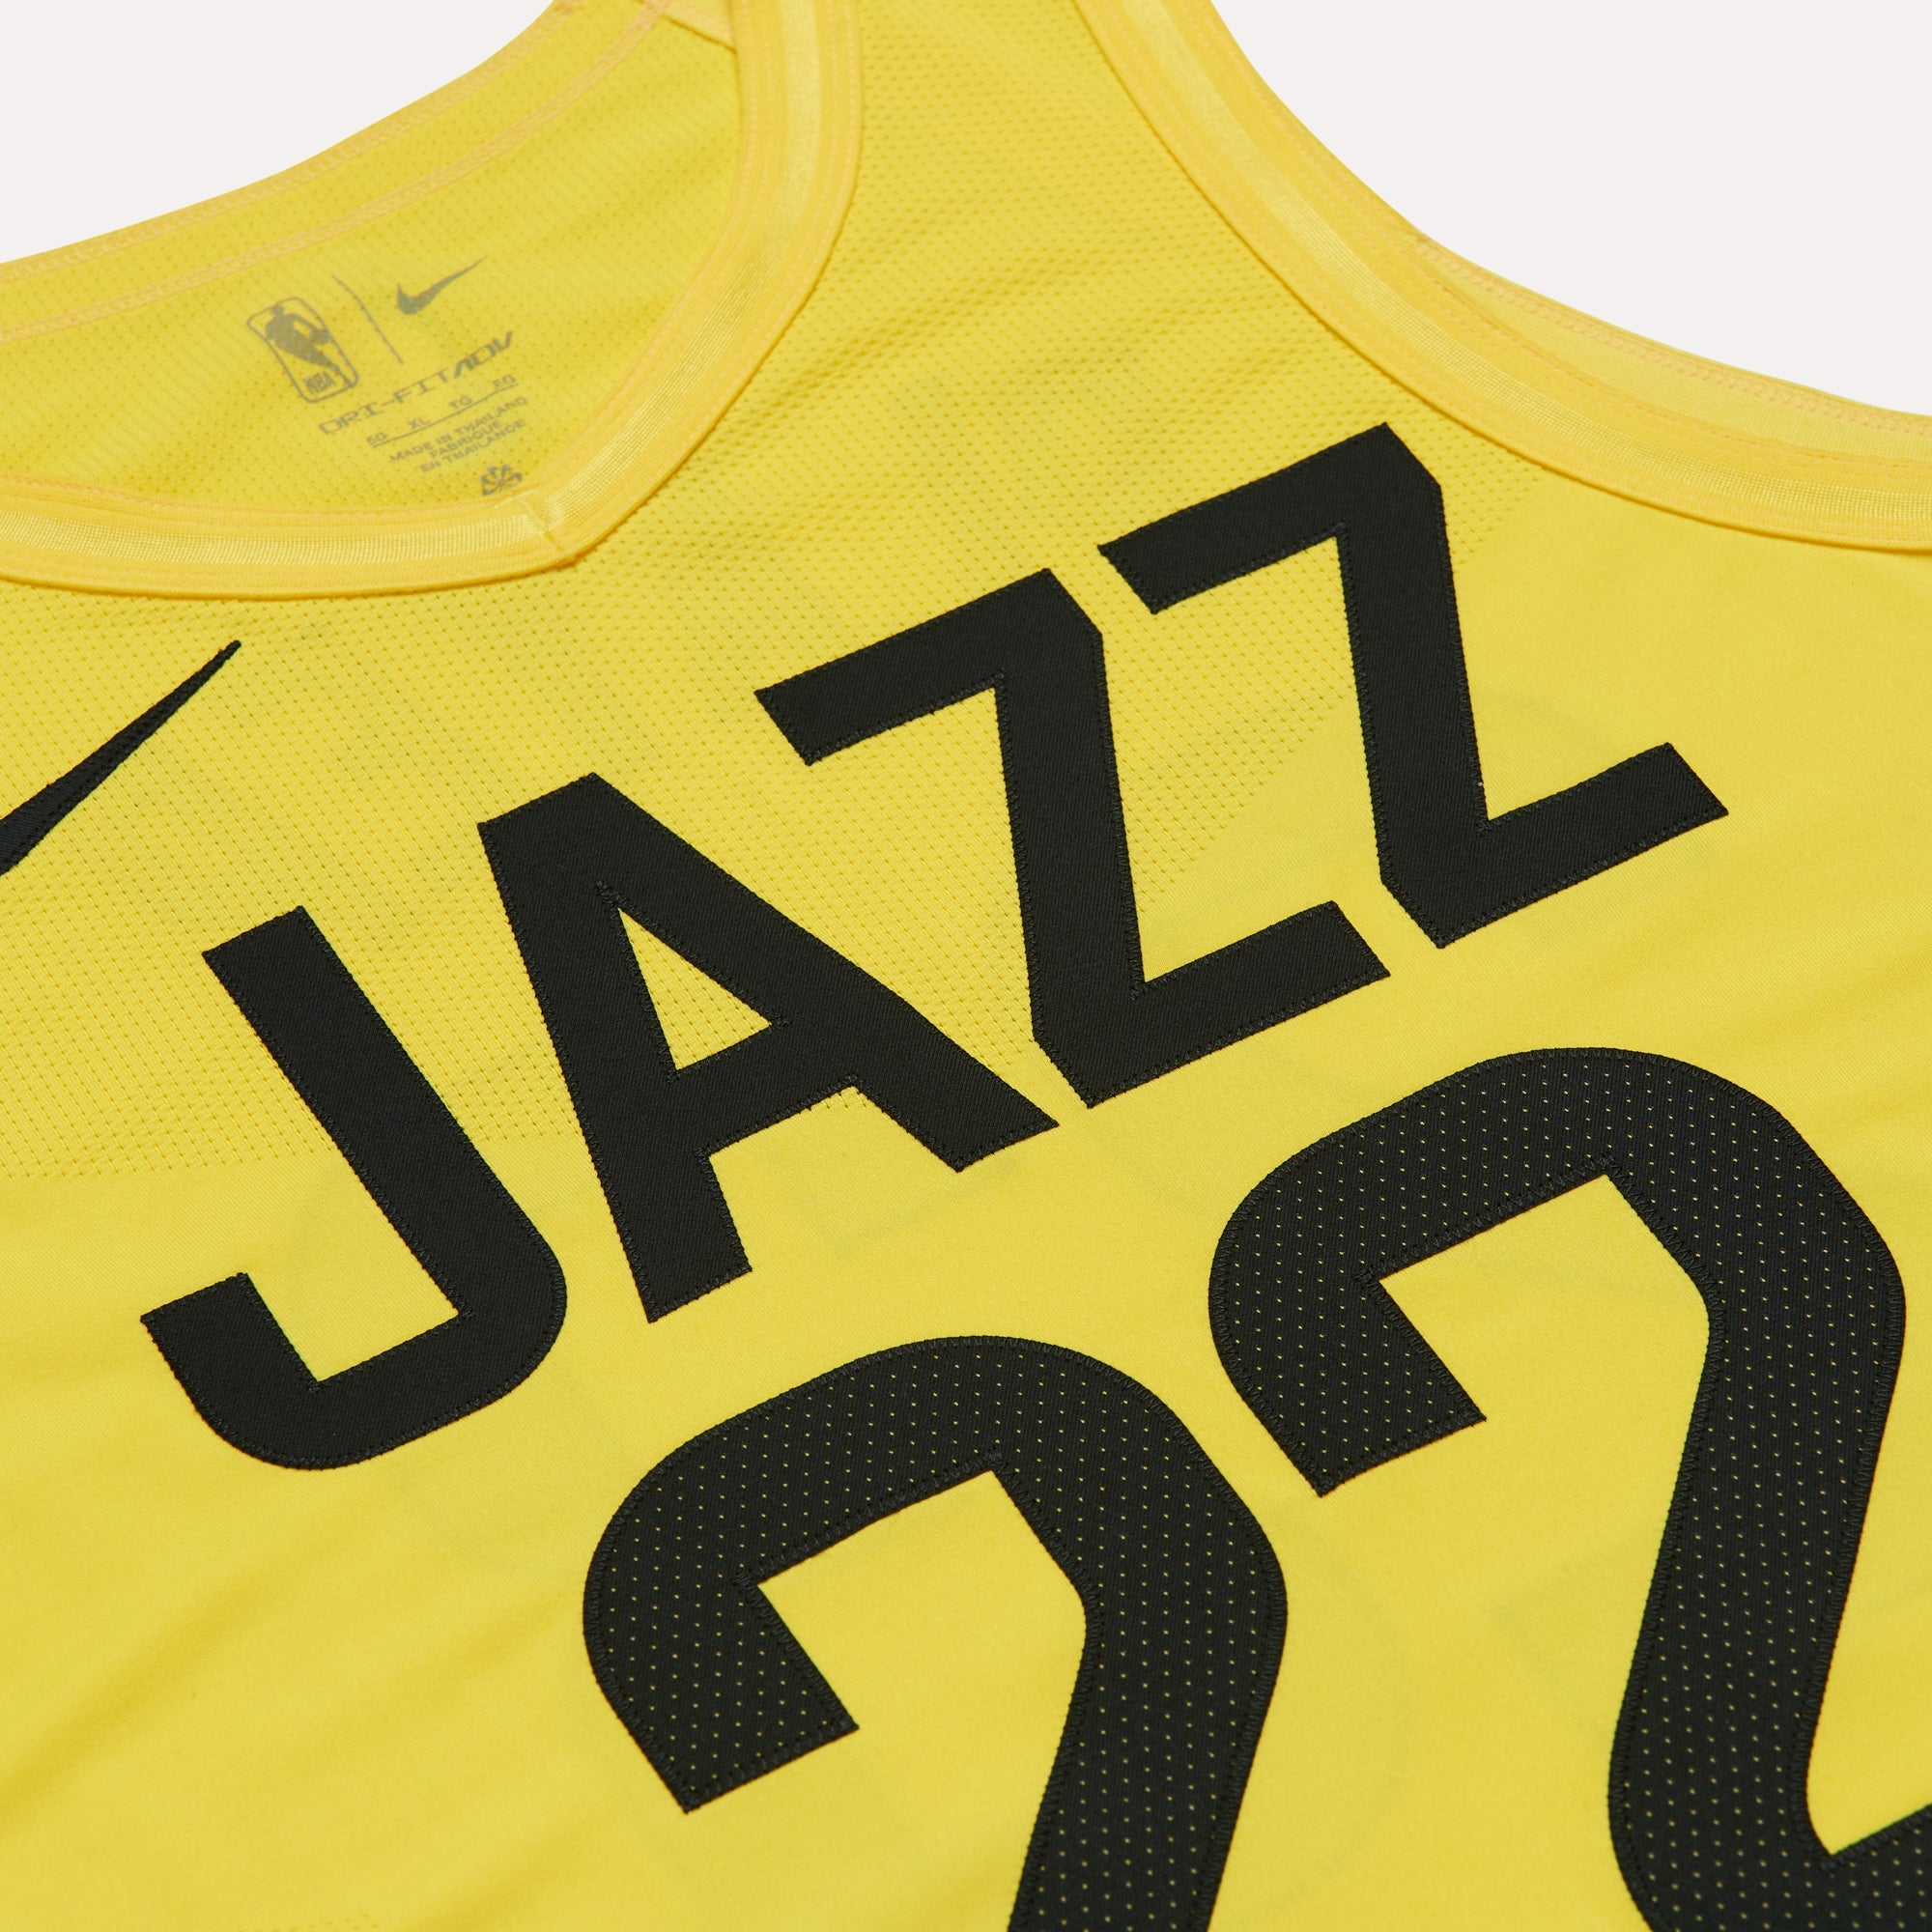 Utah Jazz Association Edition 2022/23 Nike Dri-FIT NBA Swingman Jersey.